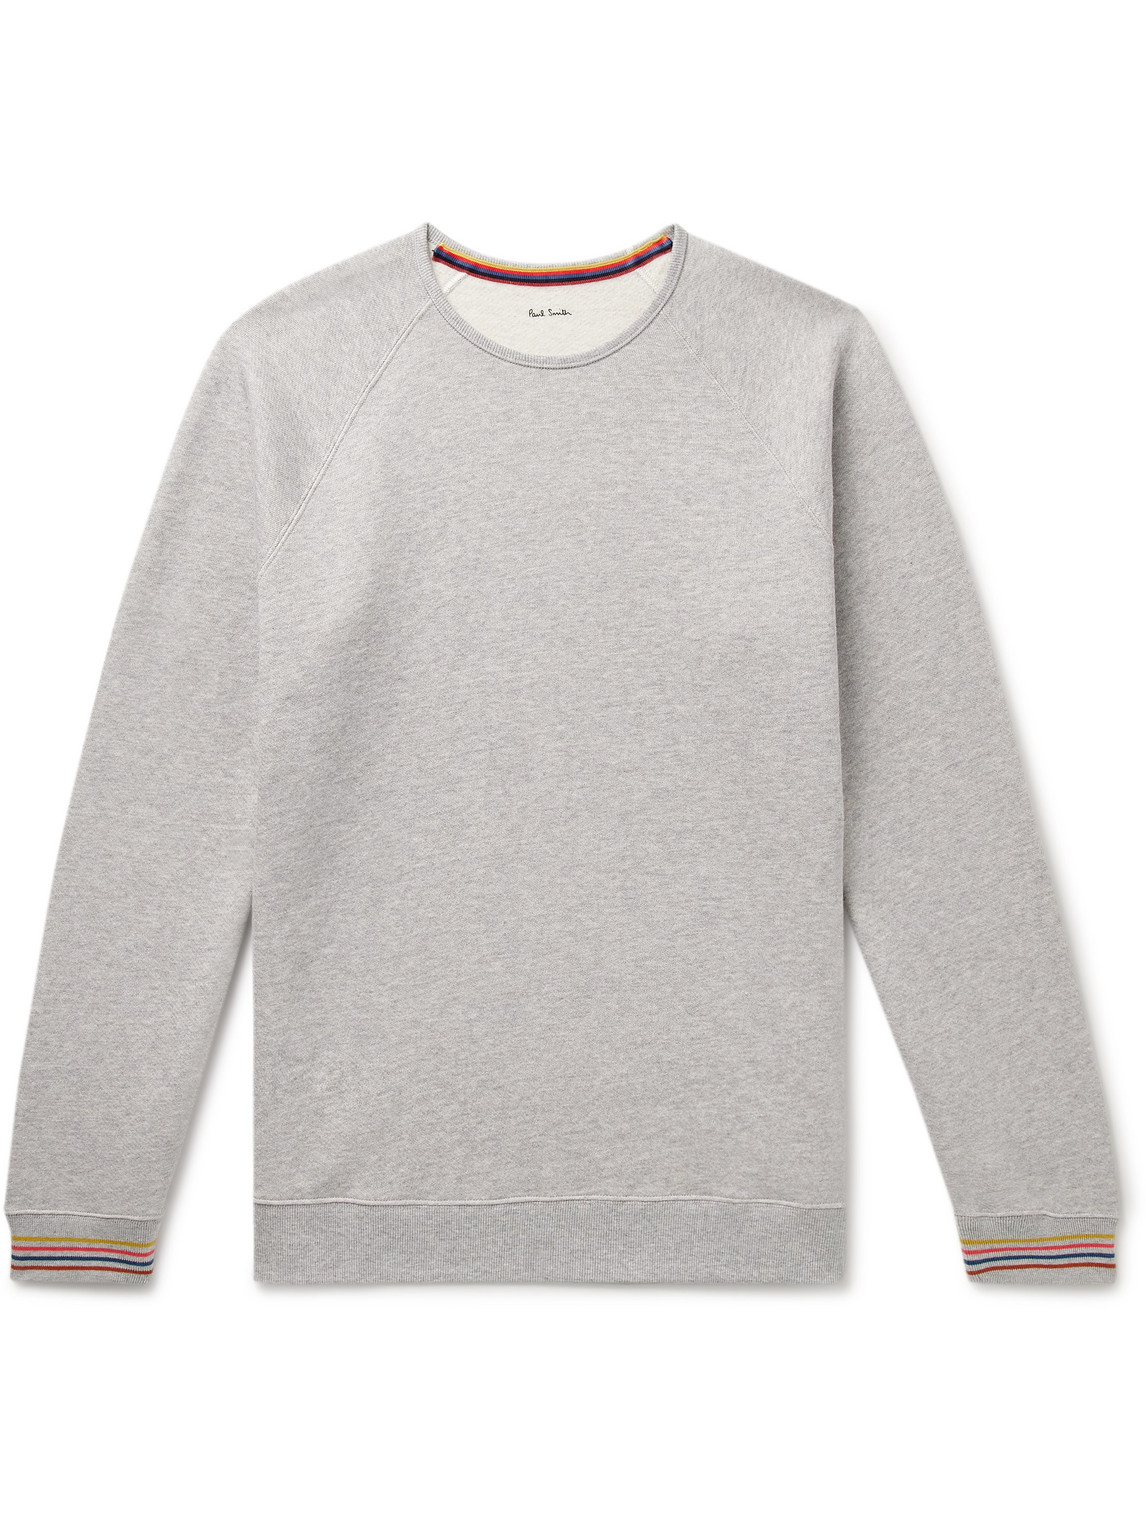 Paul Smith Striped Cotton-jersey Sweatshirt In Gray